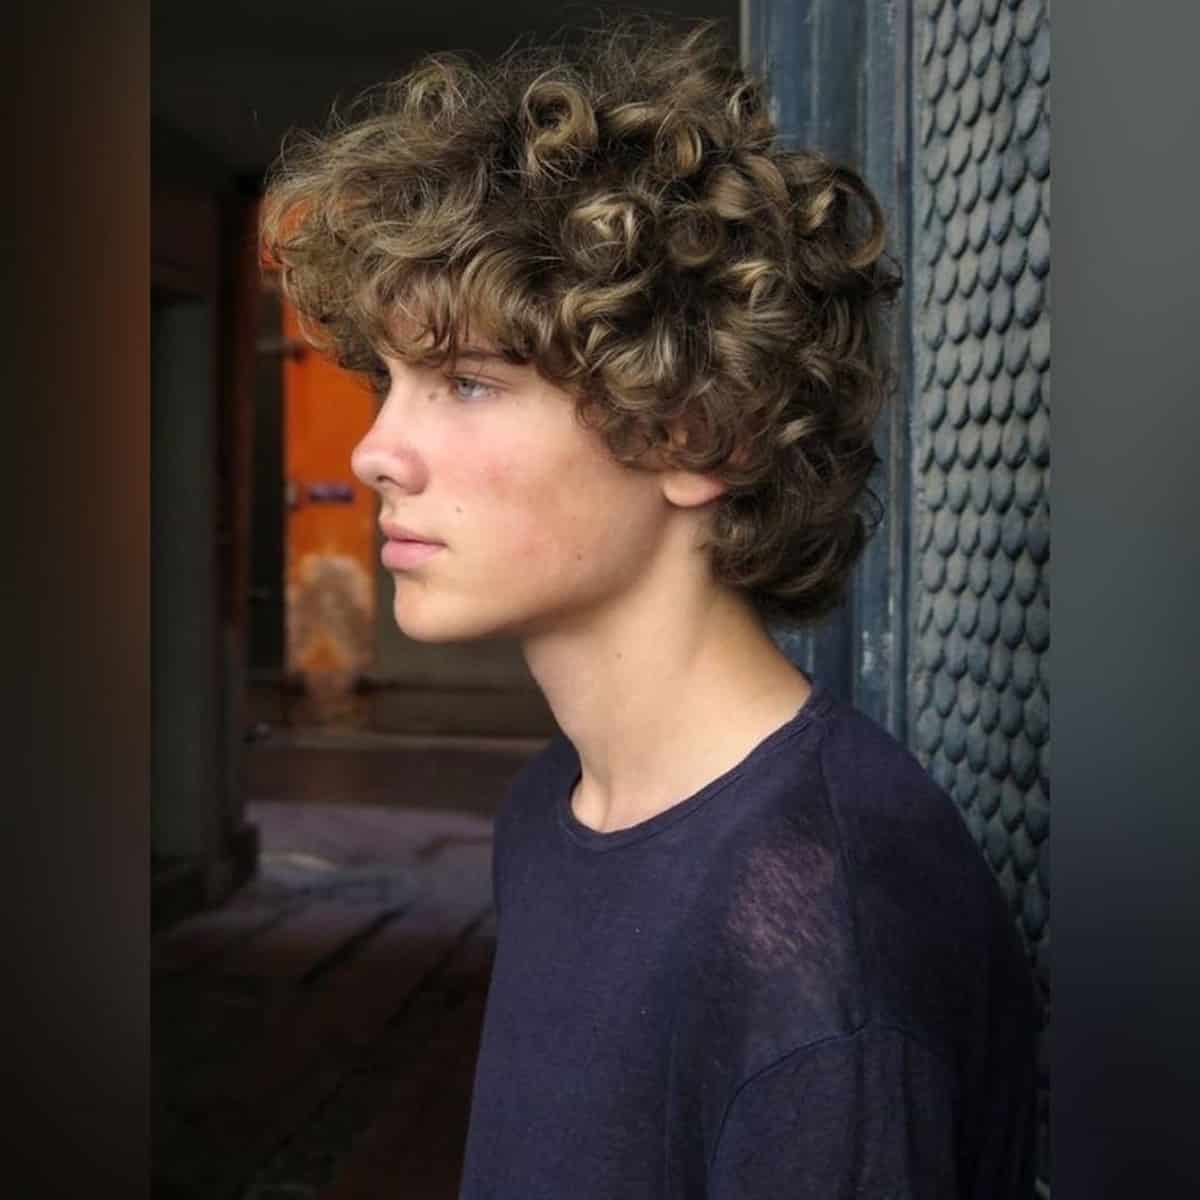 Teen boy curly hair